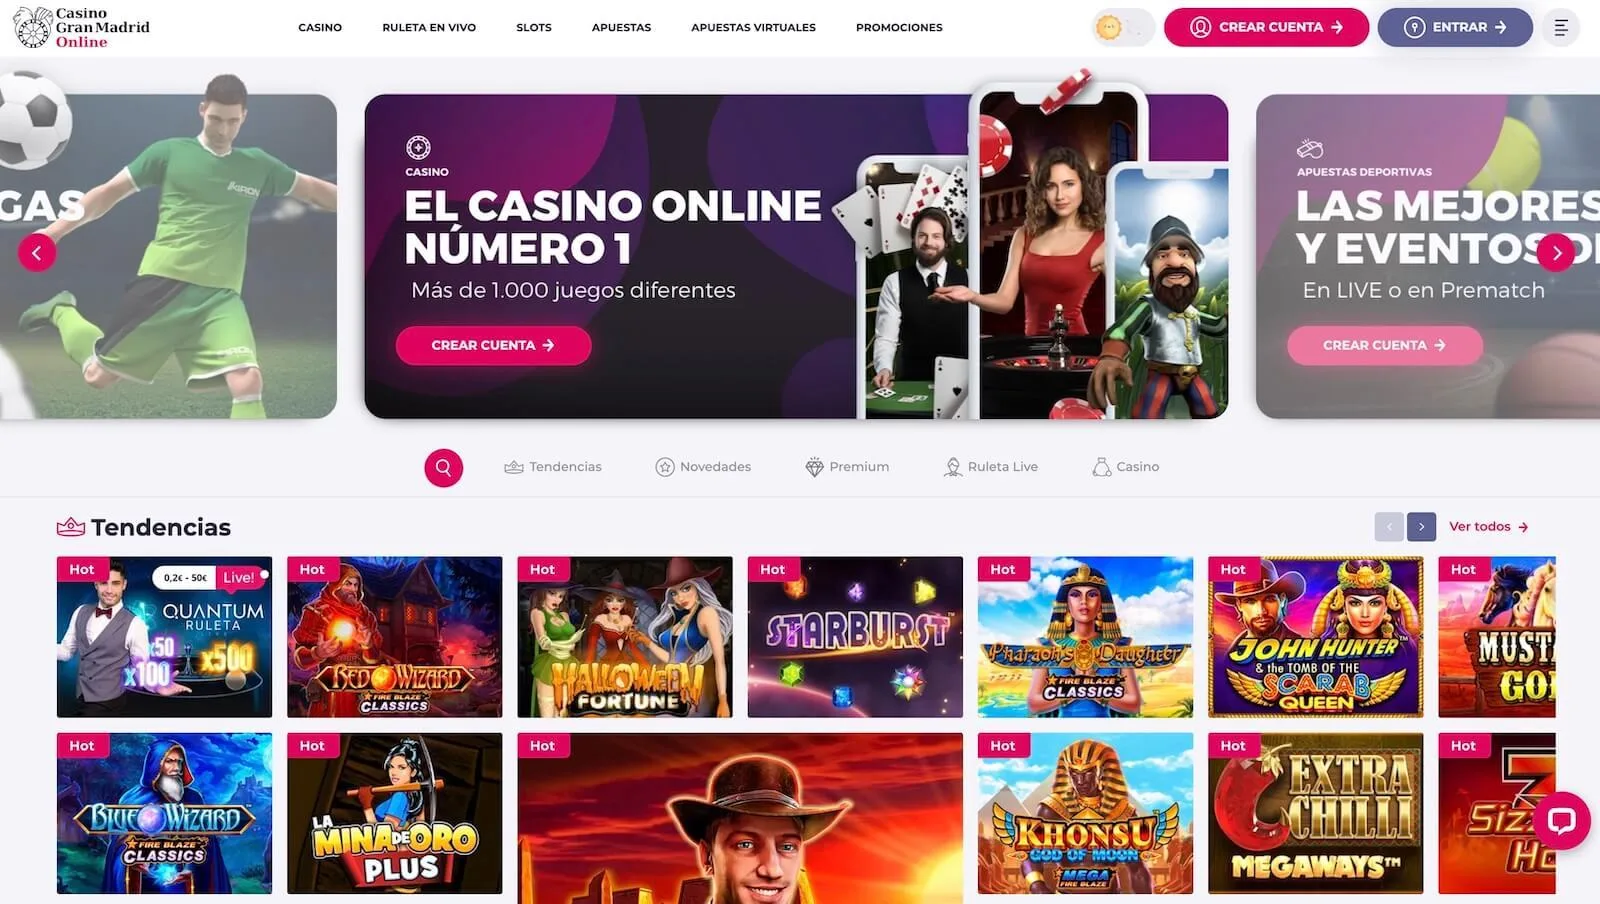 Casino Gran Madrid Casino Online Espana